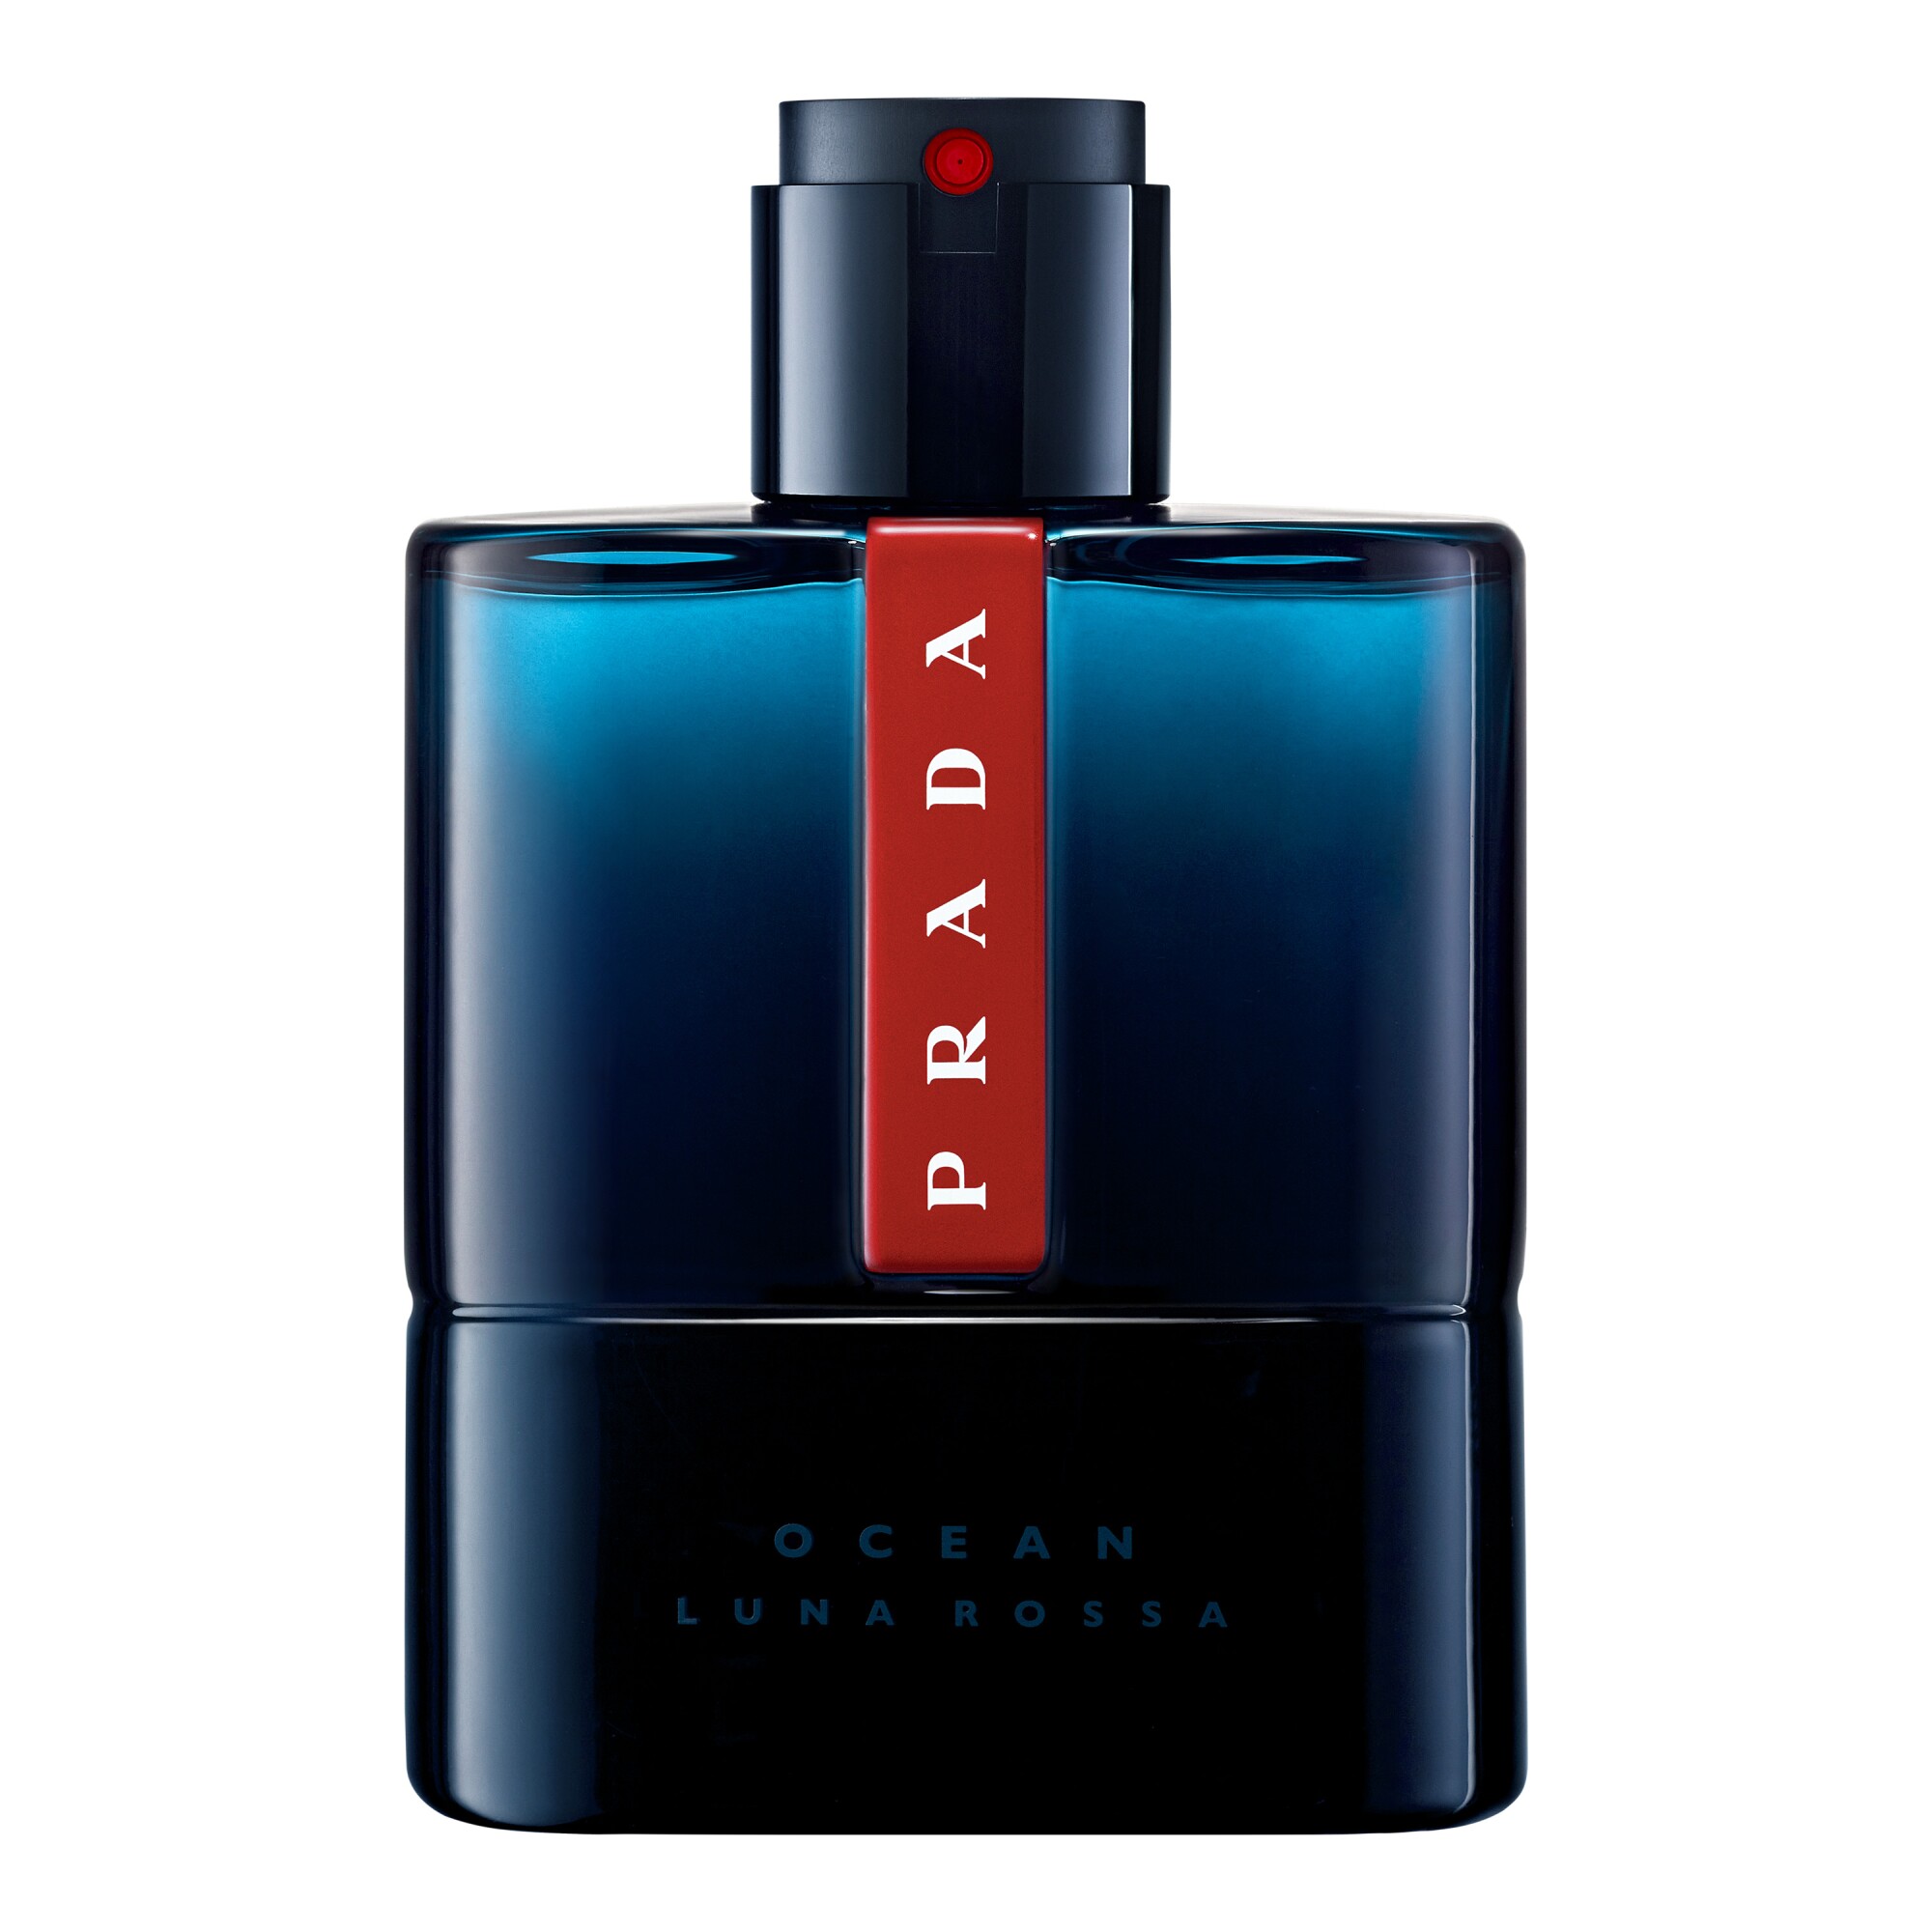 Dark blue perfume bottle with a red Prada label